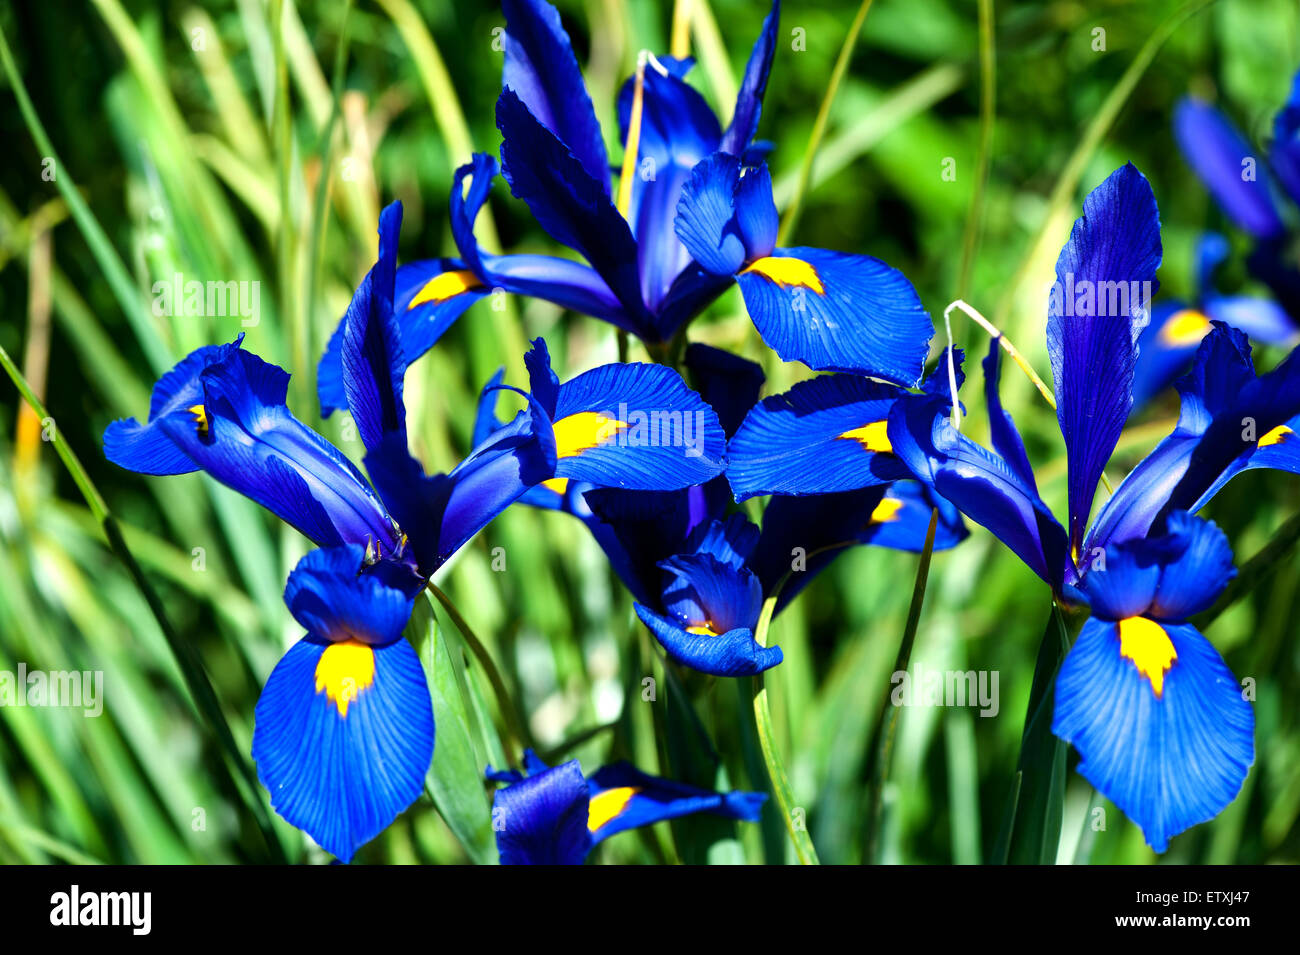 Closeup of a beautiful flower iris bluish in color Stock Photo